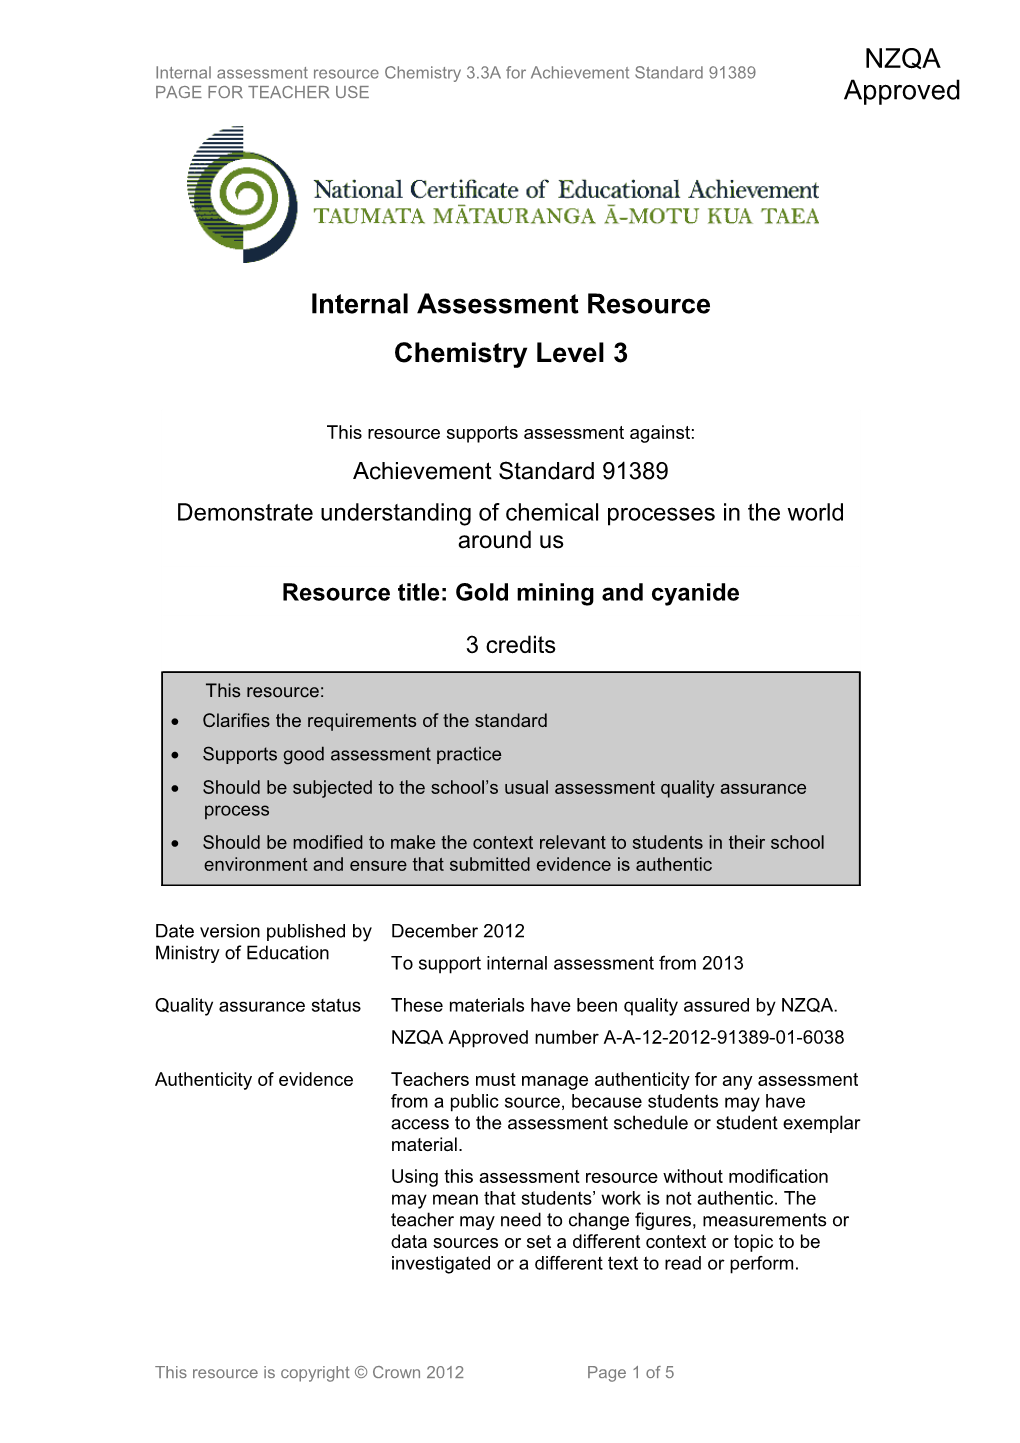 Level 3 Chemistry Internal Assessment Resource